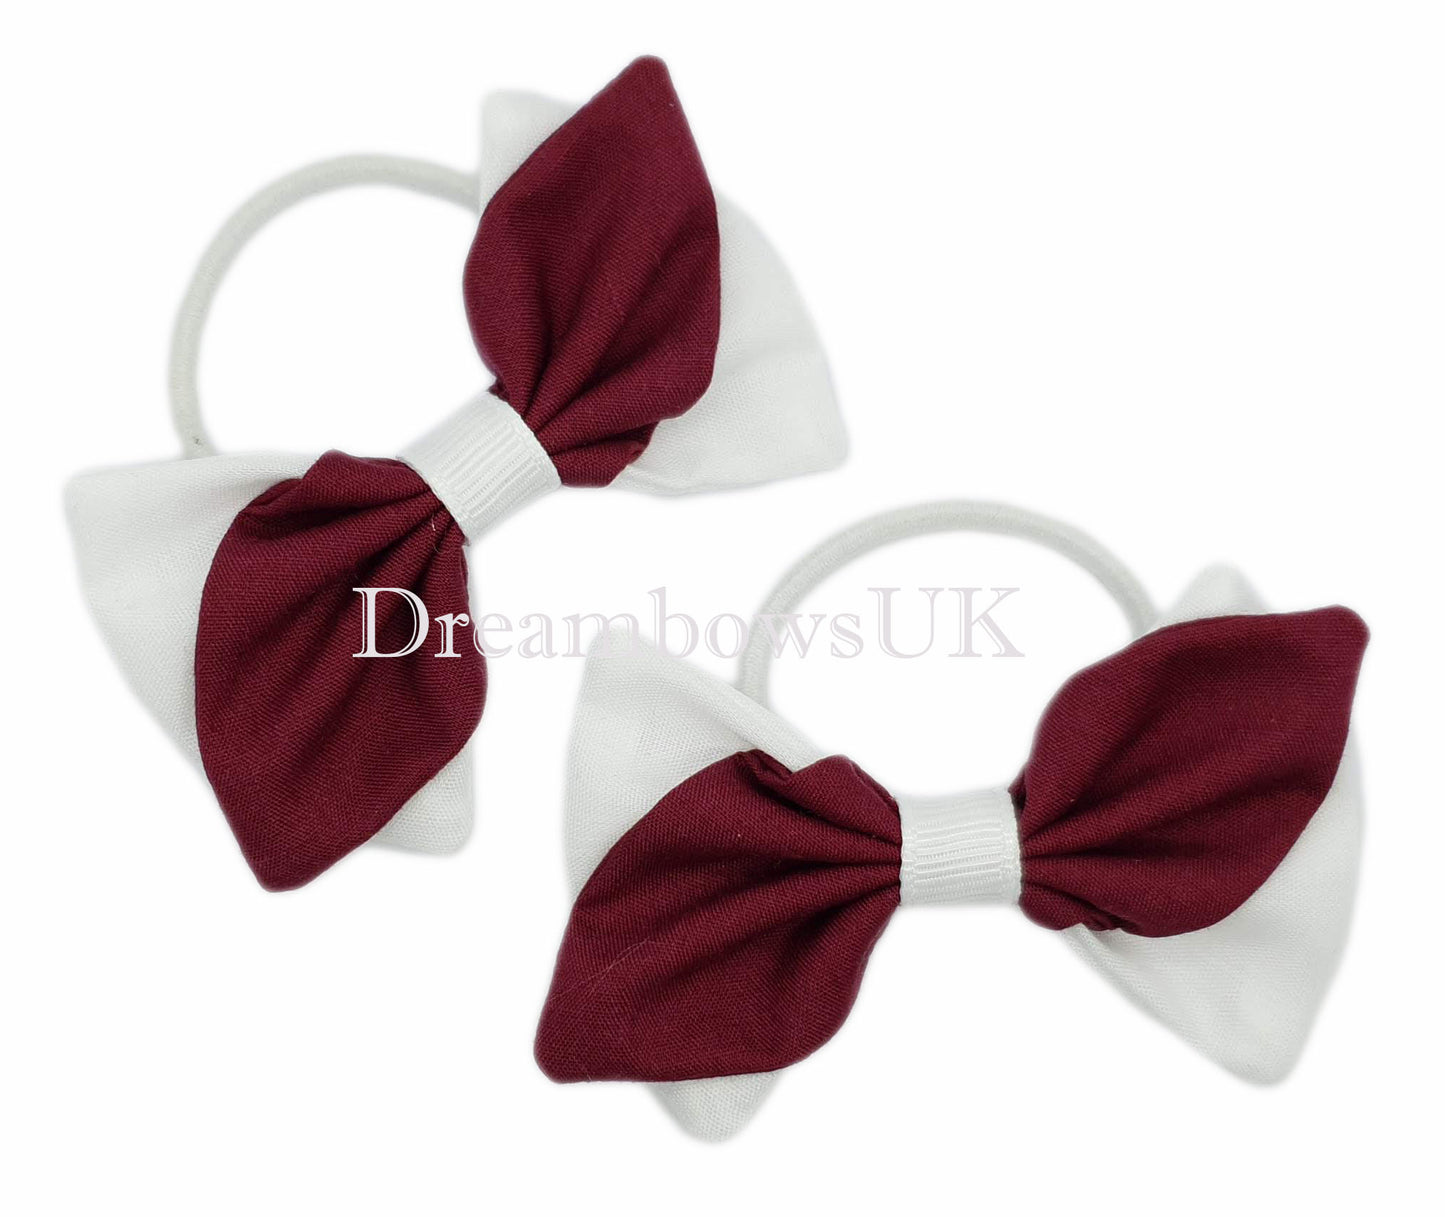 2x Burgundy and white fabric hair bows